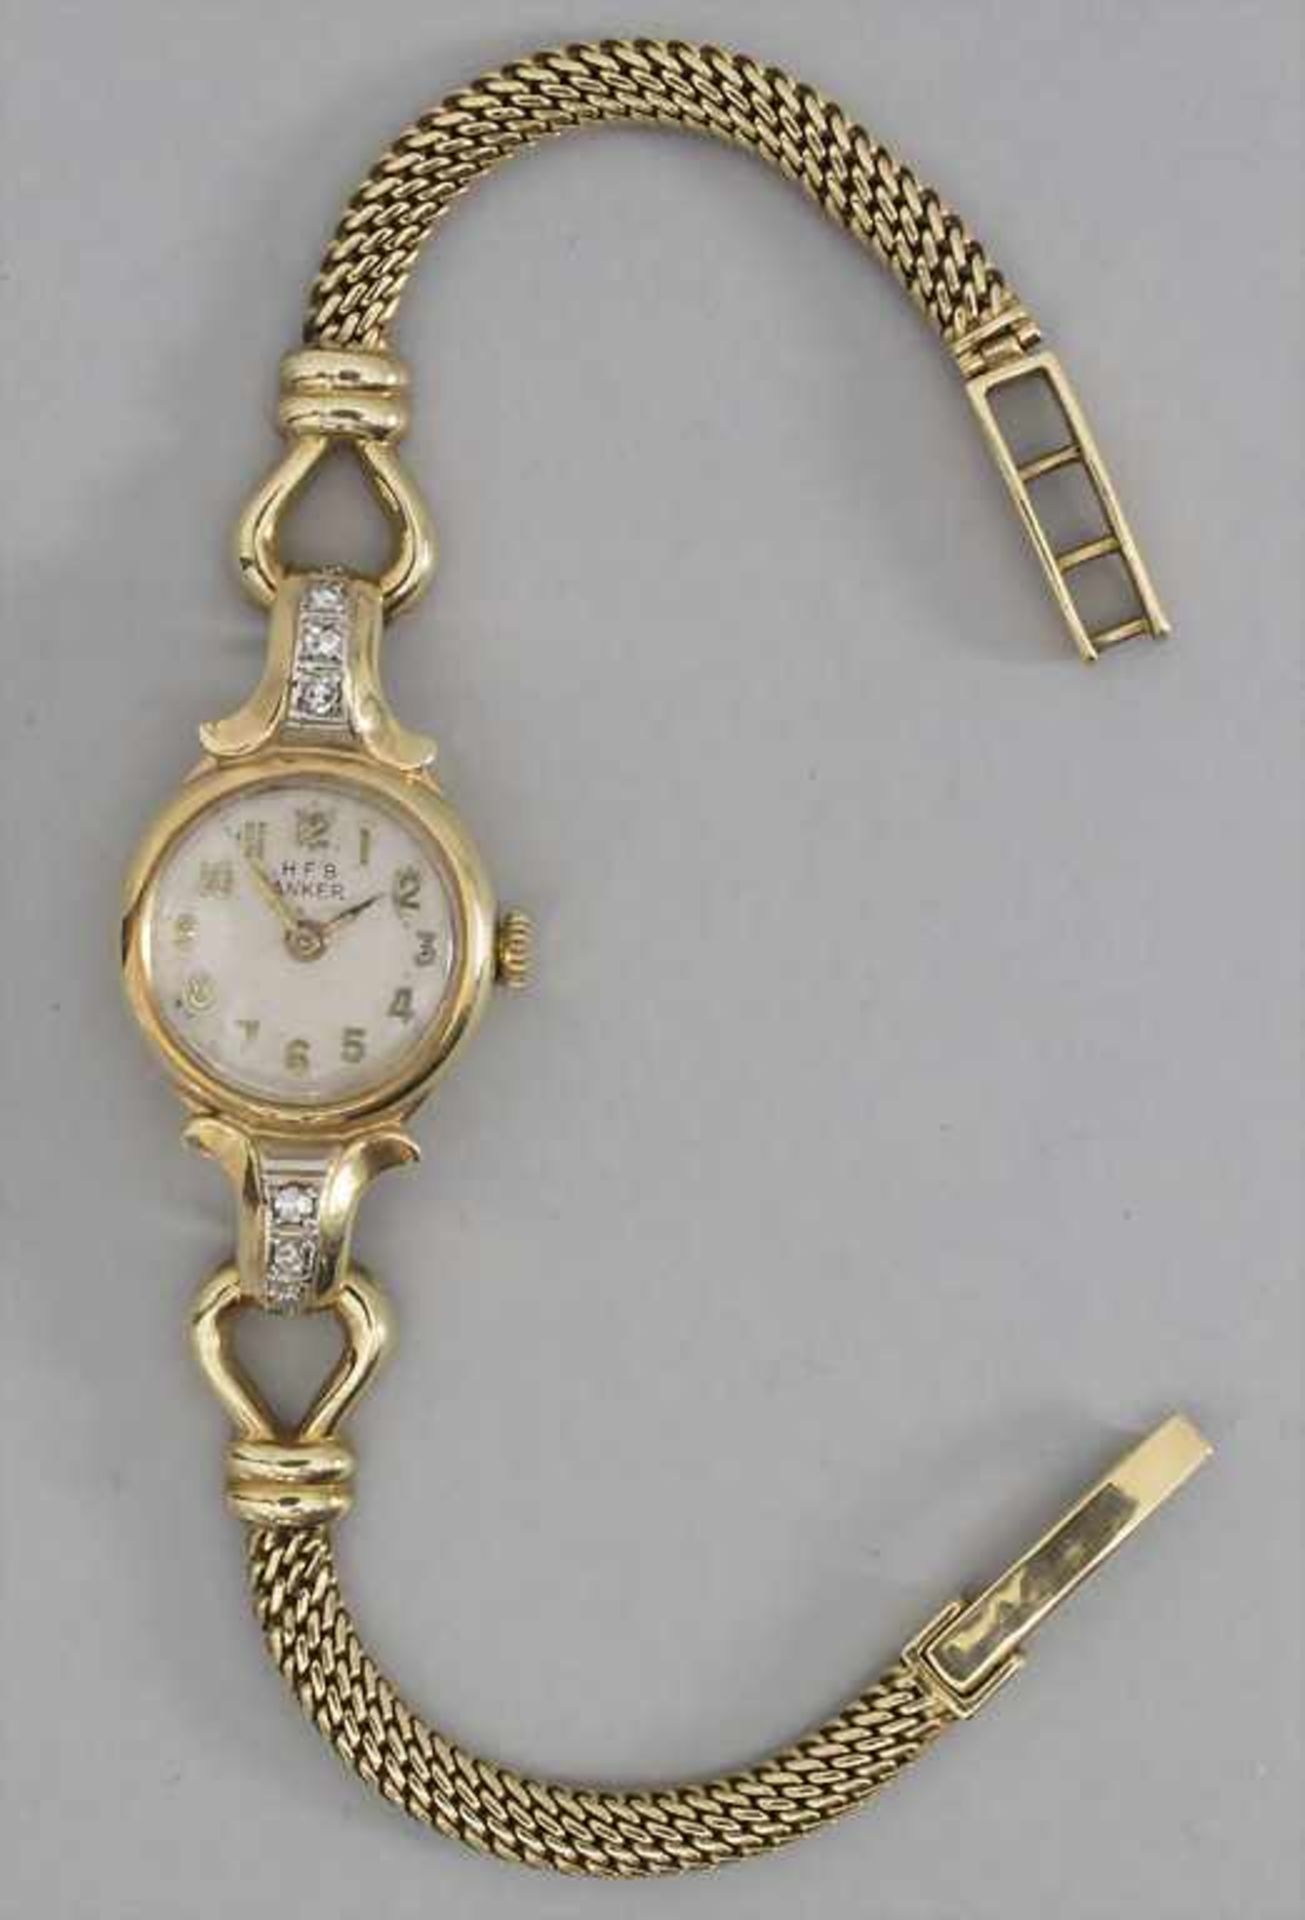 Damenarmbanduhr in Gold / A ladies watch in gold, H.F.B, um 1960 - Bild 4 aus 5